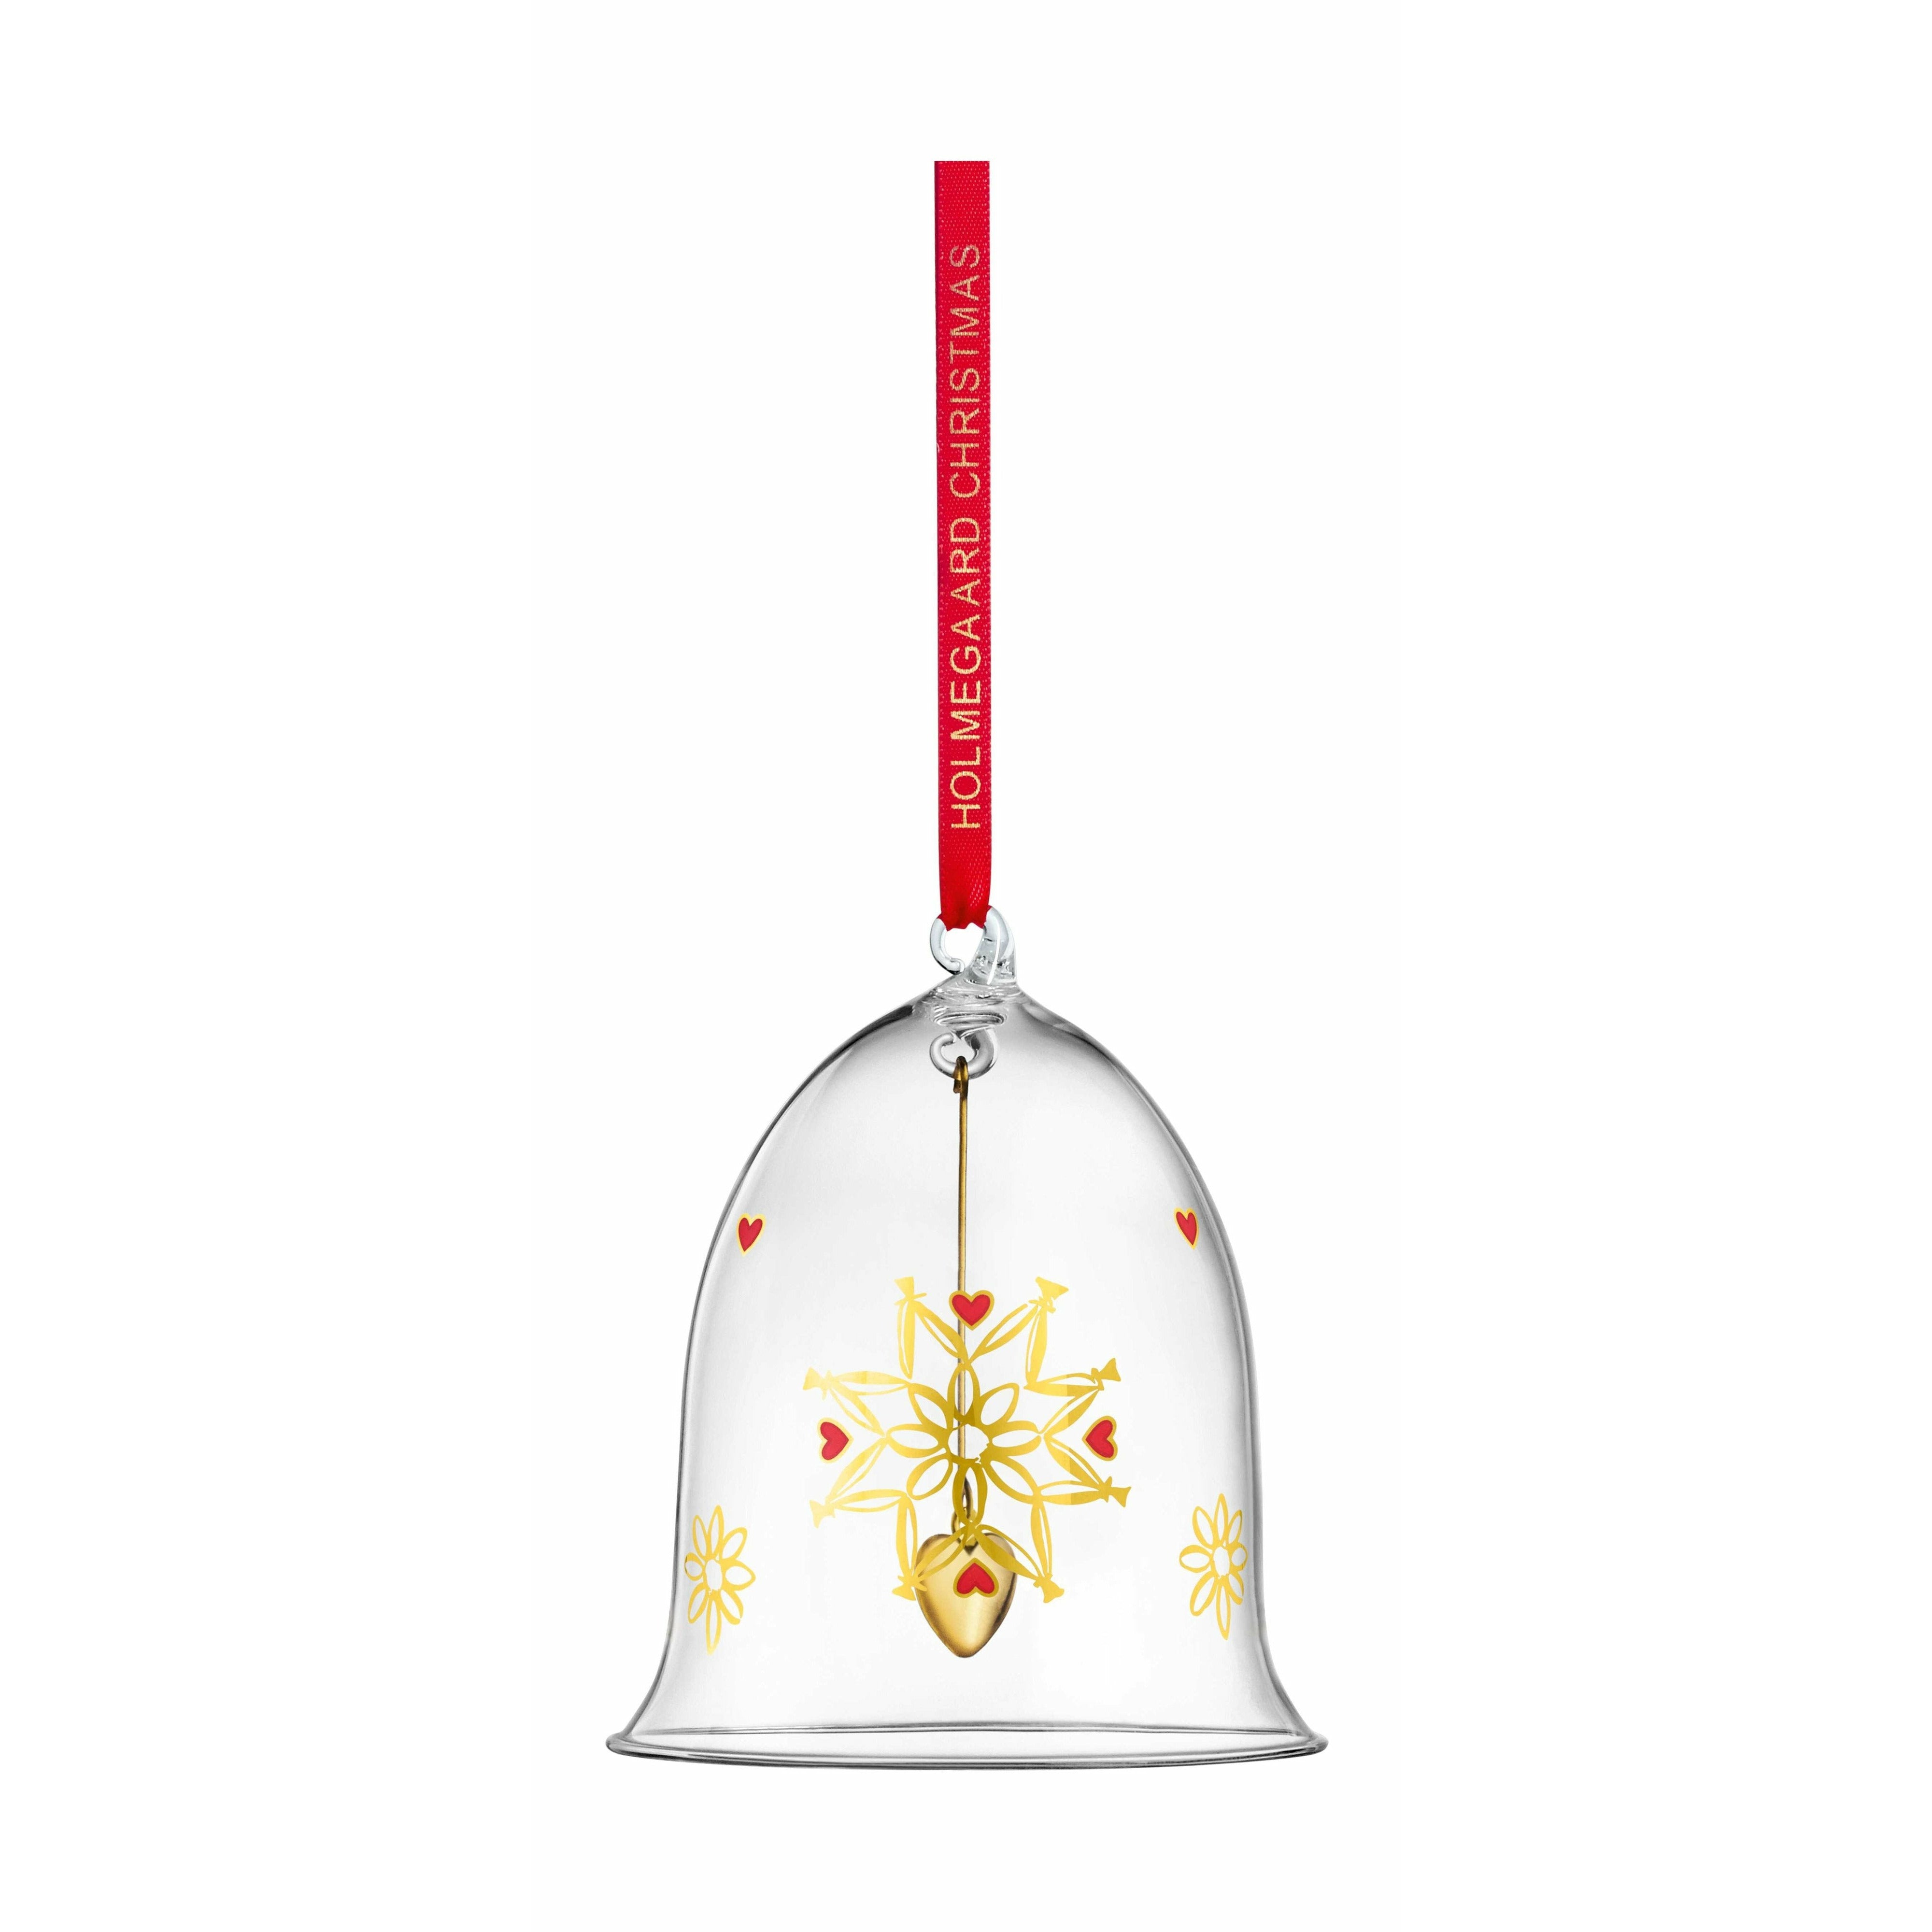 Holmegaard Ann Sofi Romme Christmas Bell, stor